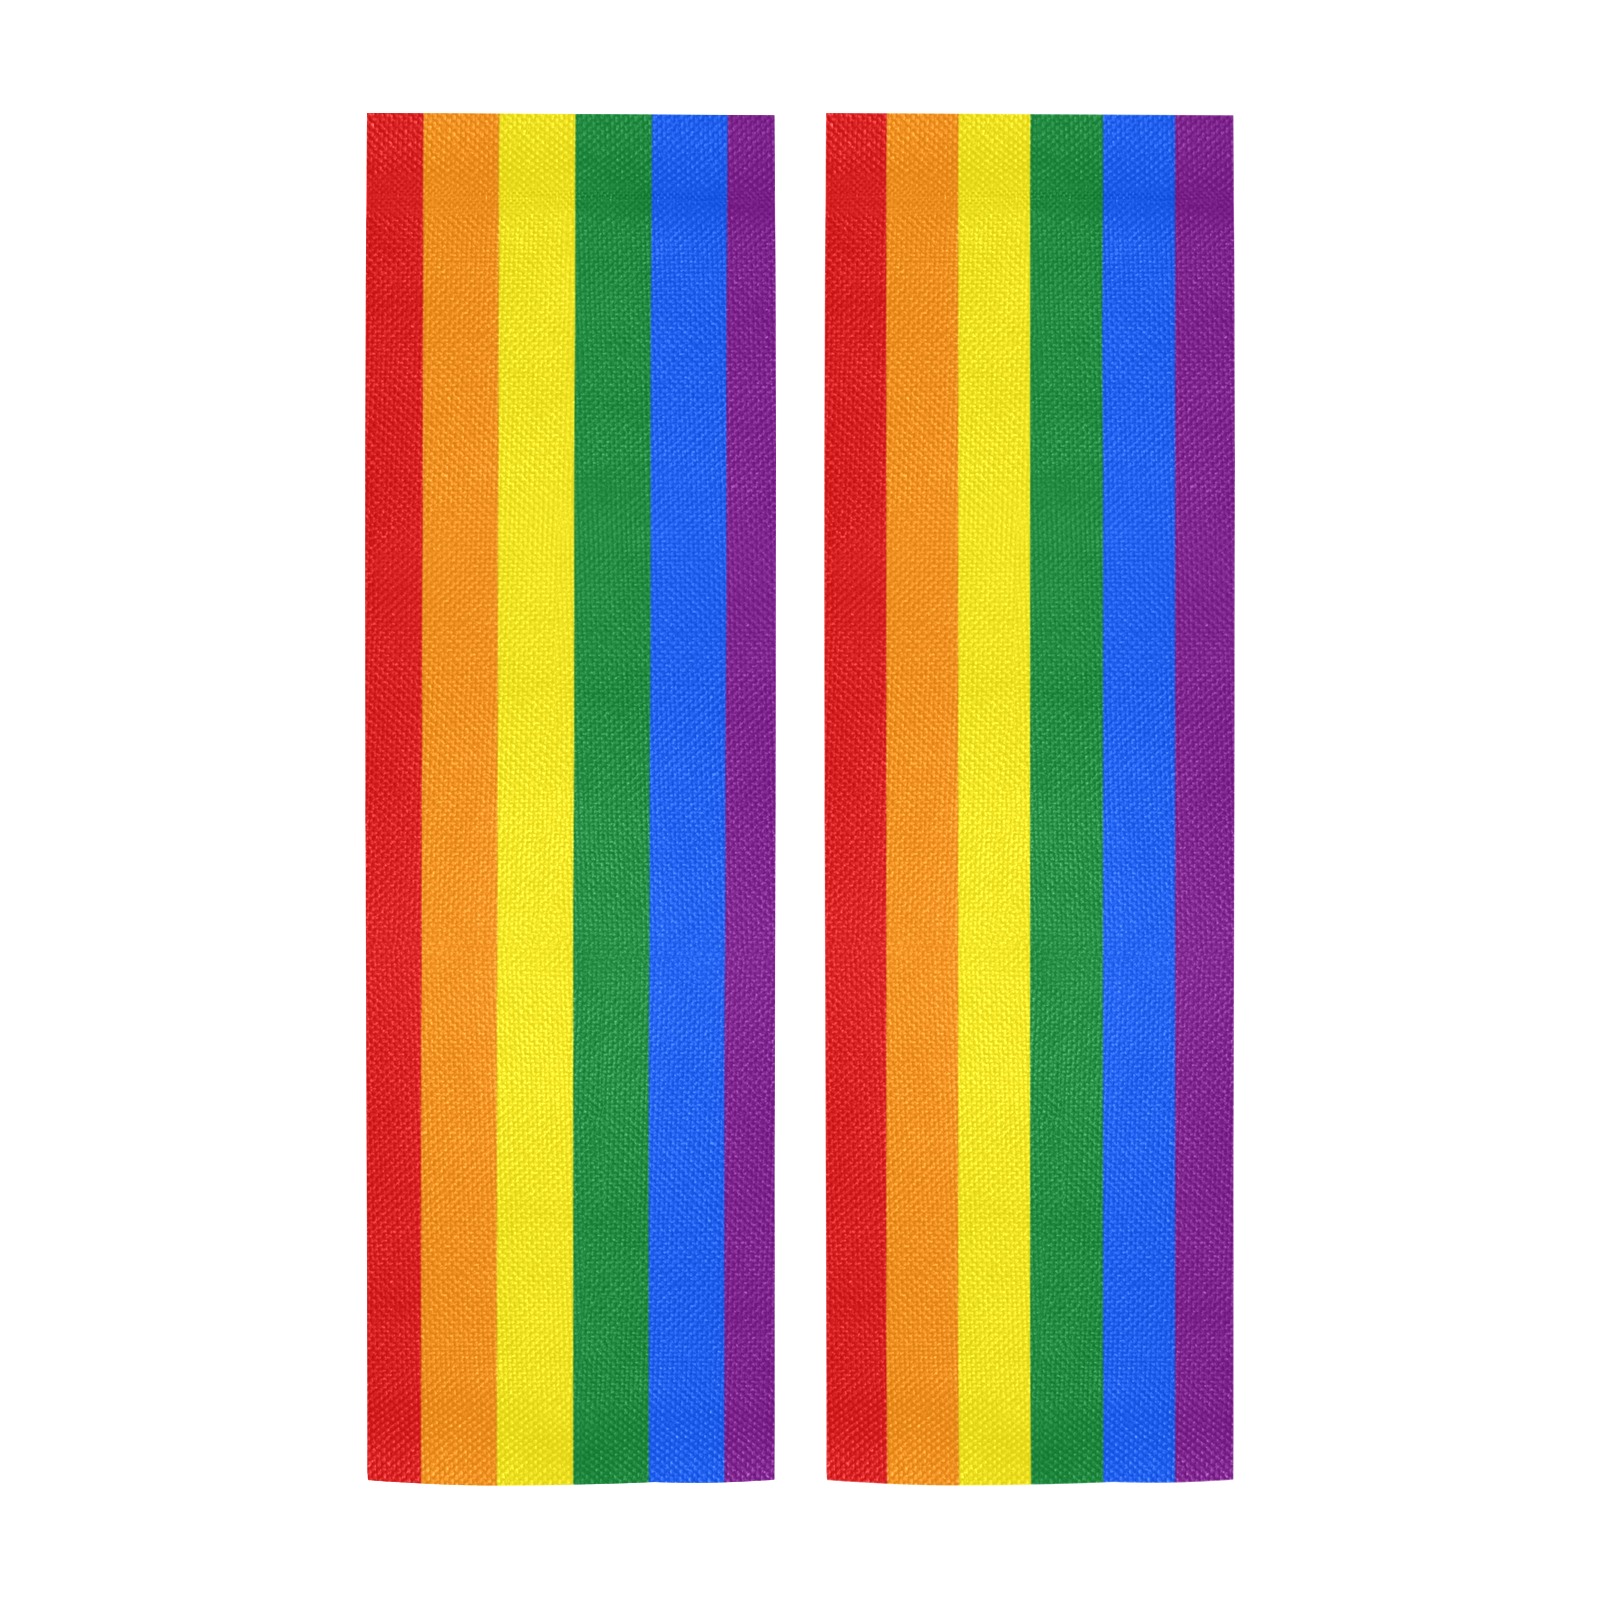 Pride Rainbow Flag Door Curtain Tapestry